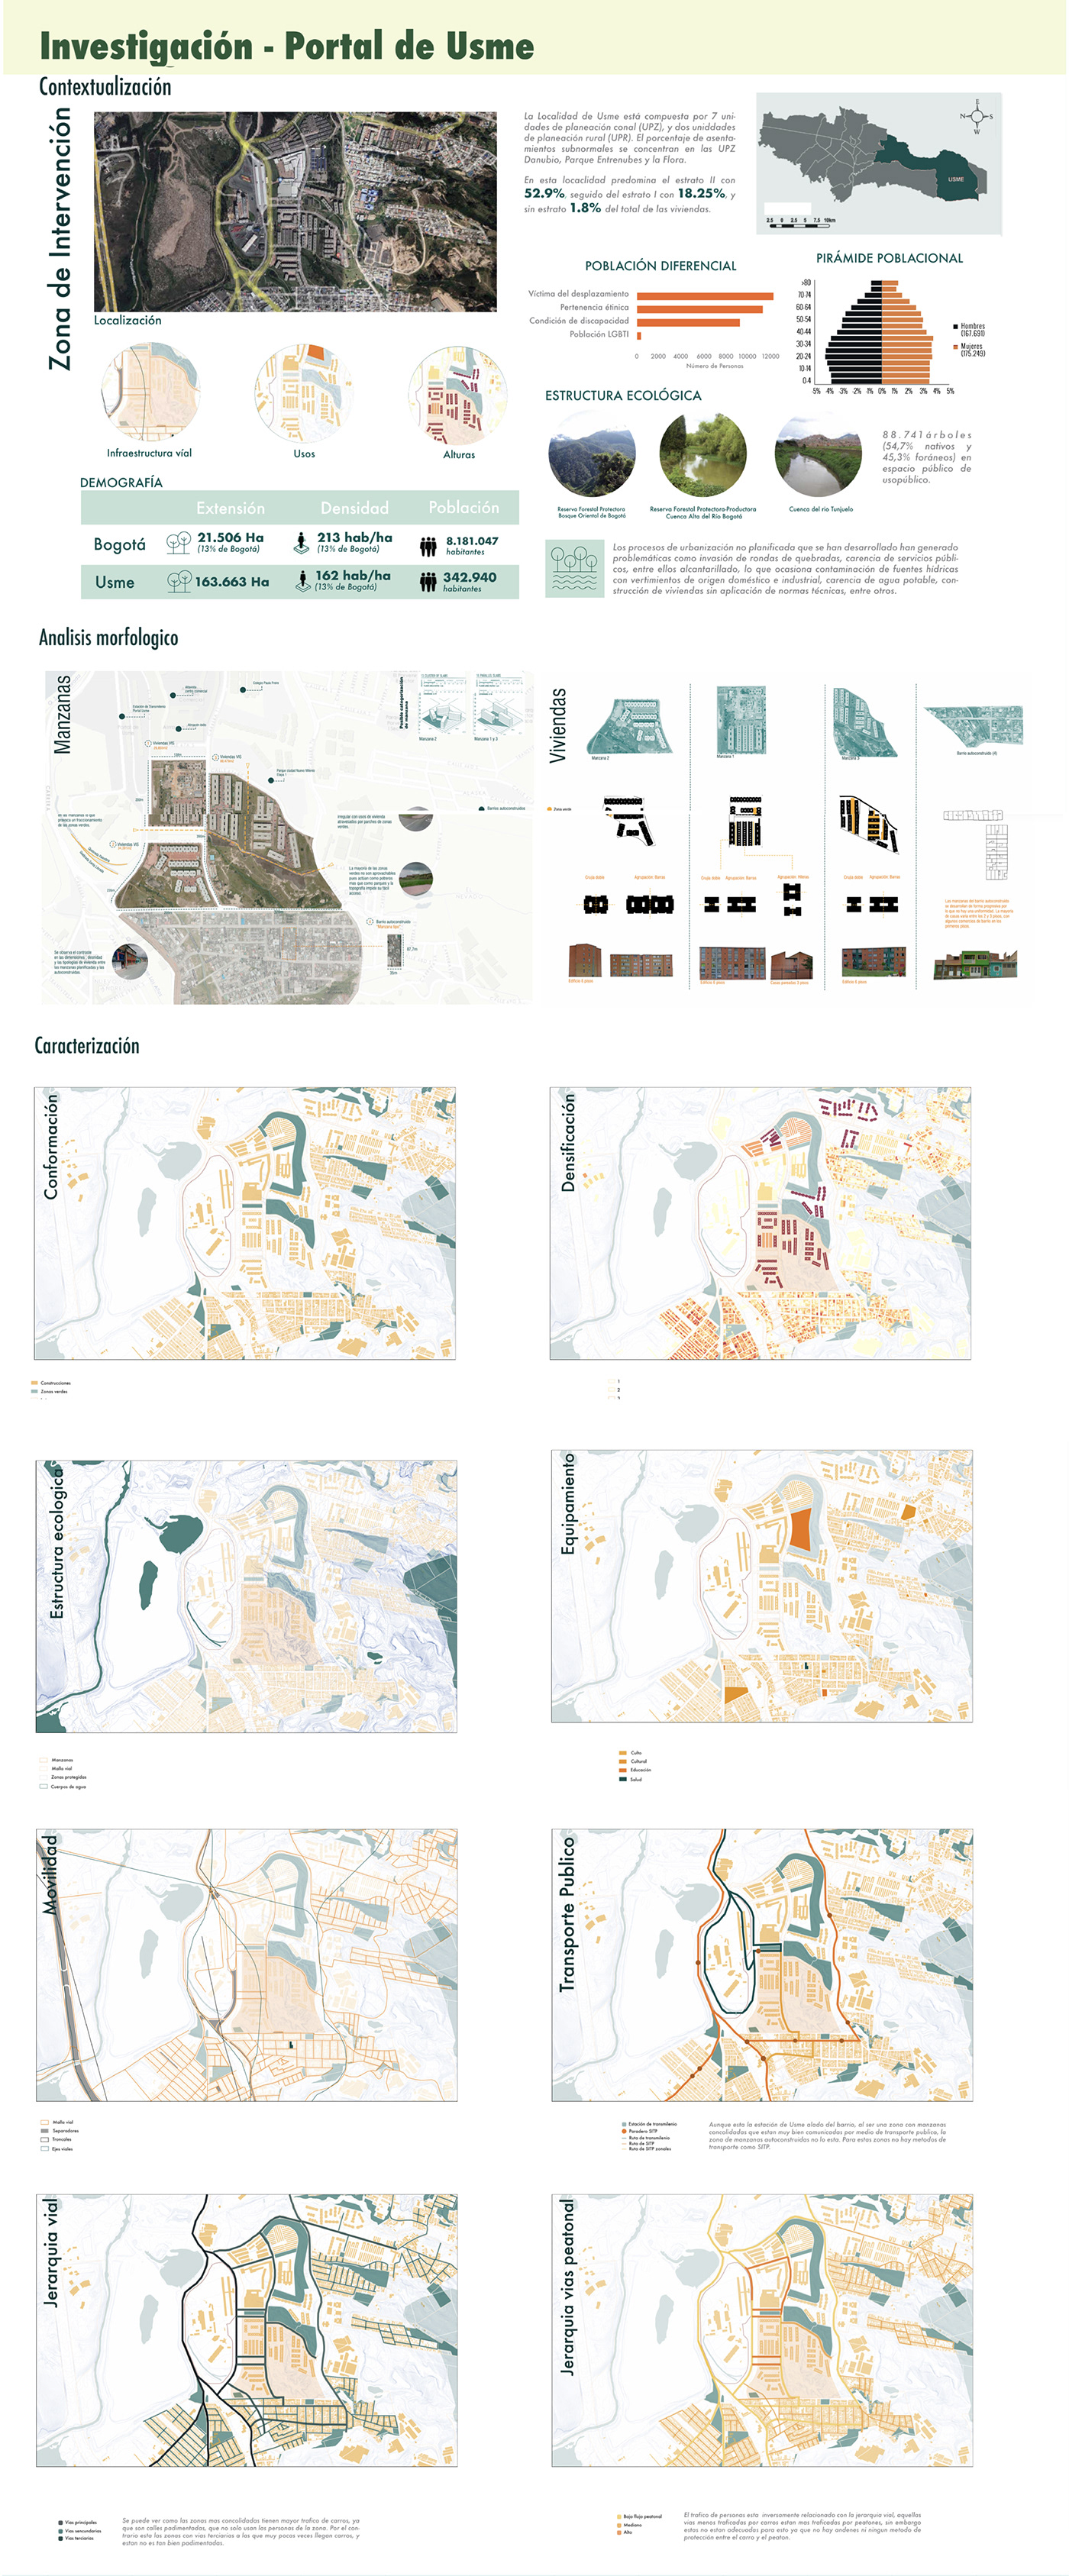 Analysis ArqDisUniandes Case Study planning Urban Design viena vivienda social